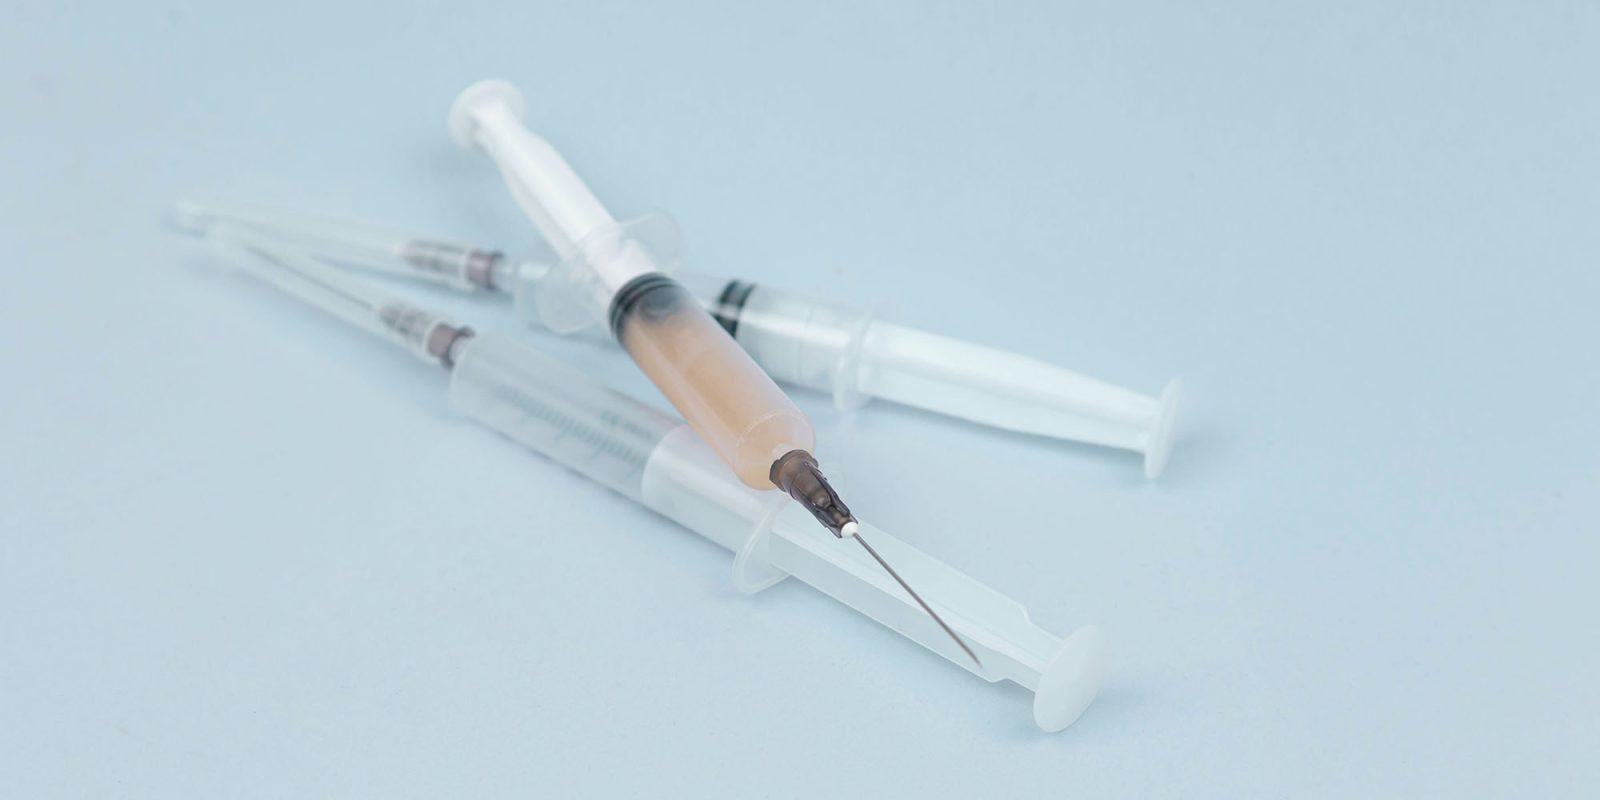 Adobe hidden pricing like heroin | Syringes shown